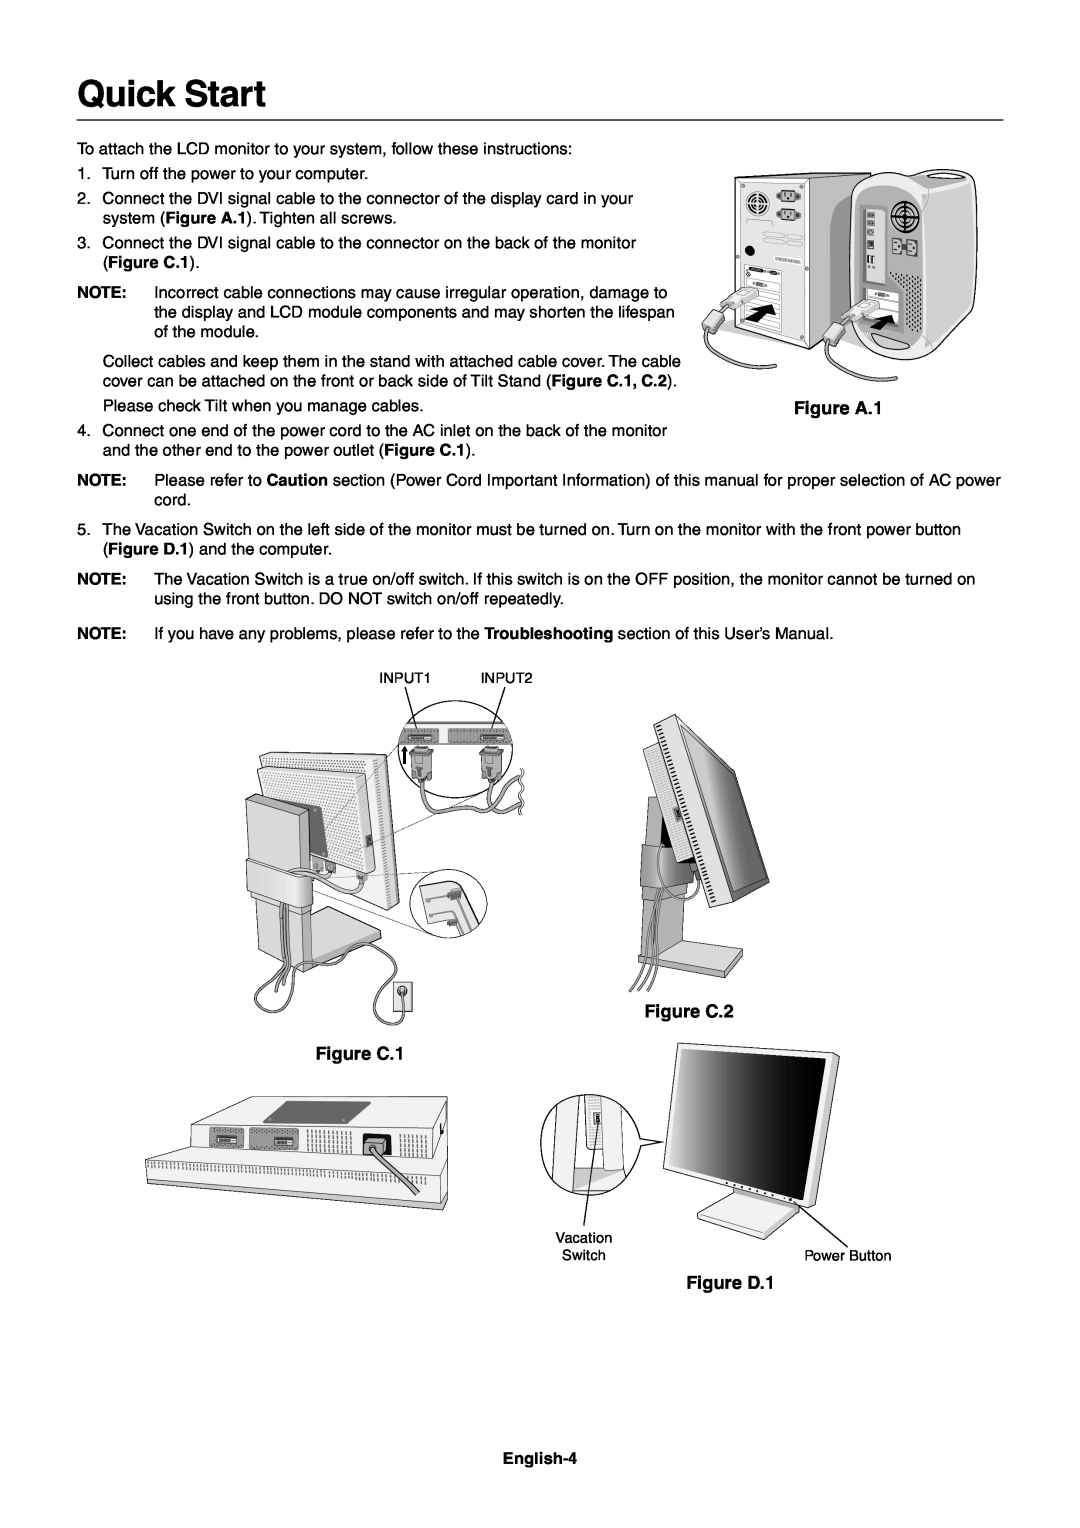 NEC LCD2180 user manual Quick Start, Figure A.1, Figure C.2 Figure C.1, Figure D.1, English-4 